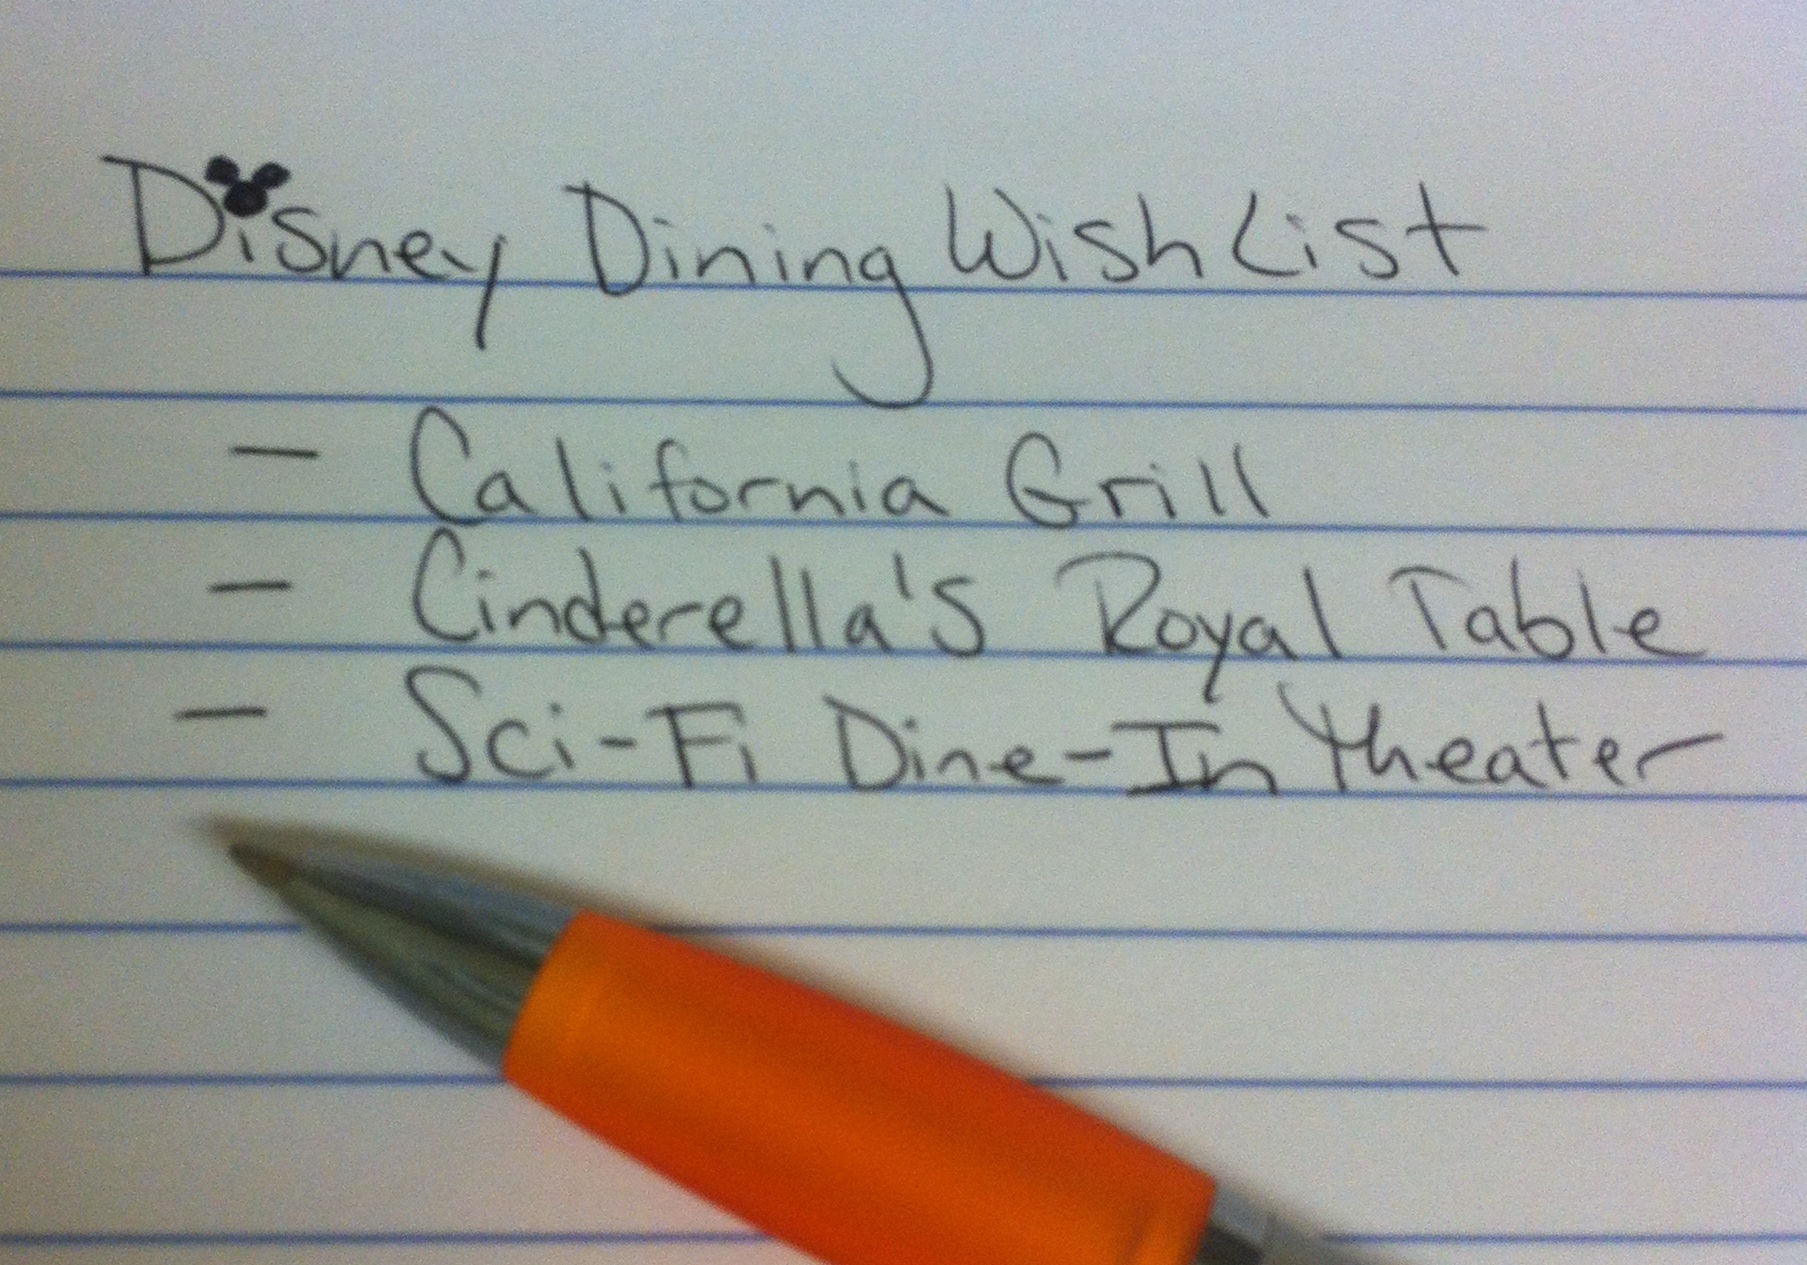 Disney Dining Wish List